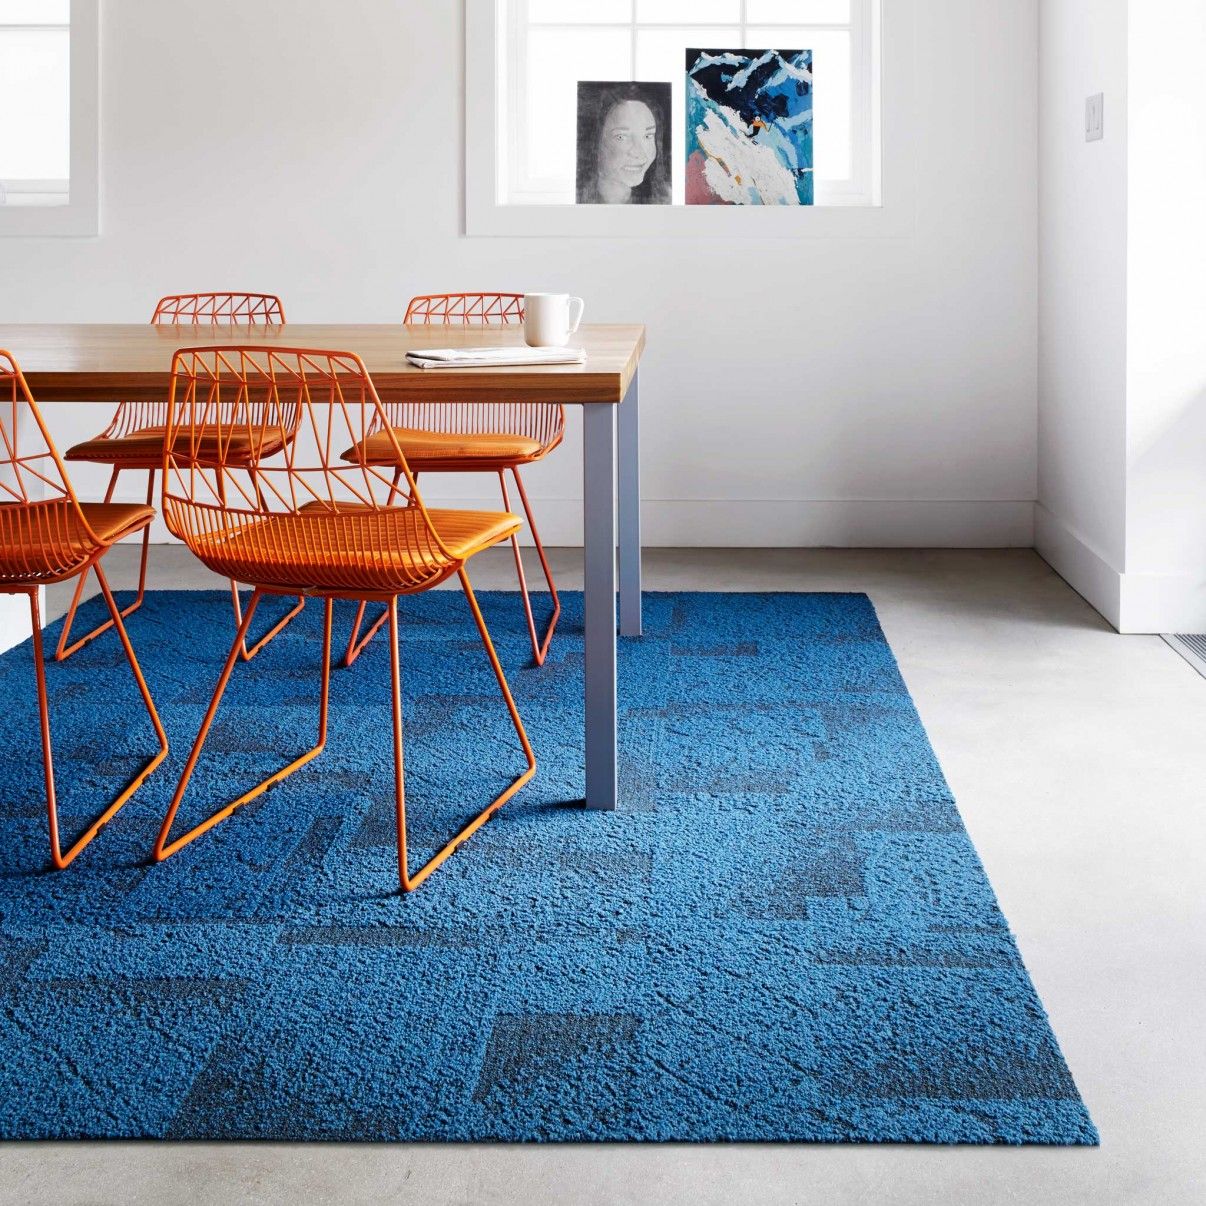 How To Install Carpet Tiles, Flor Carpet Tiles Review